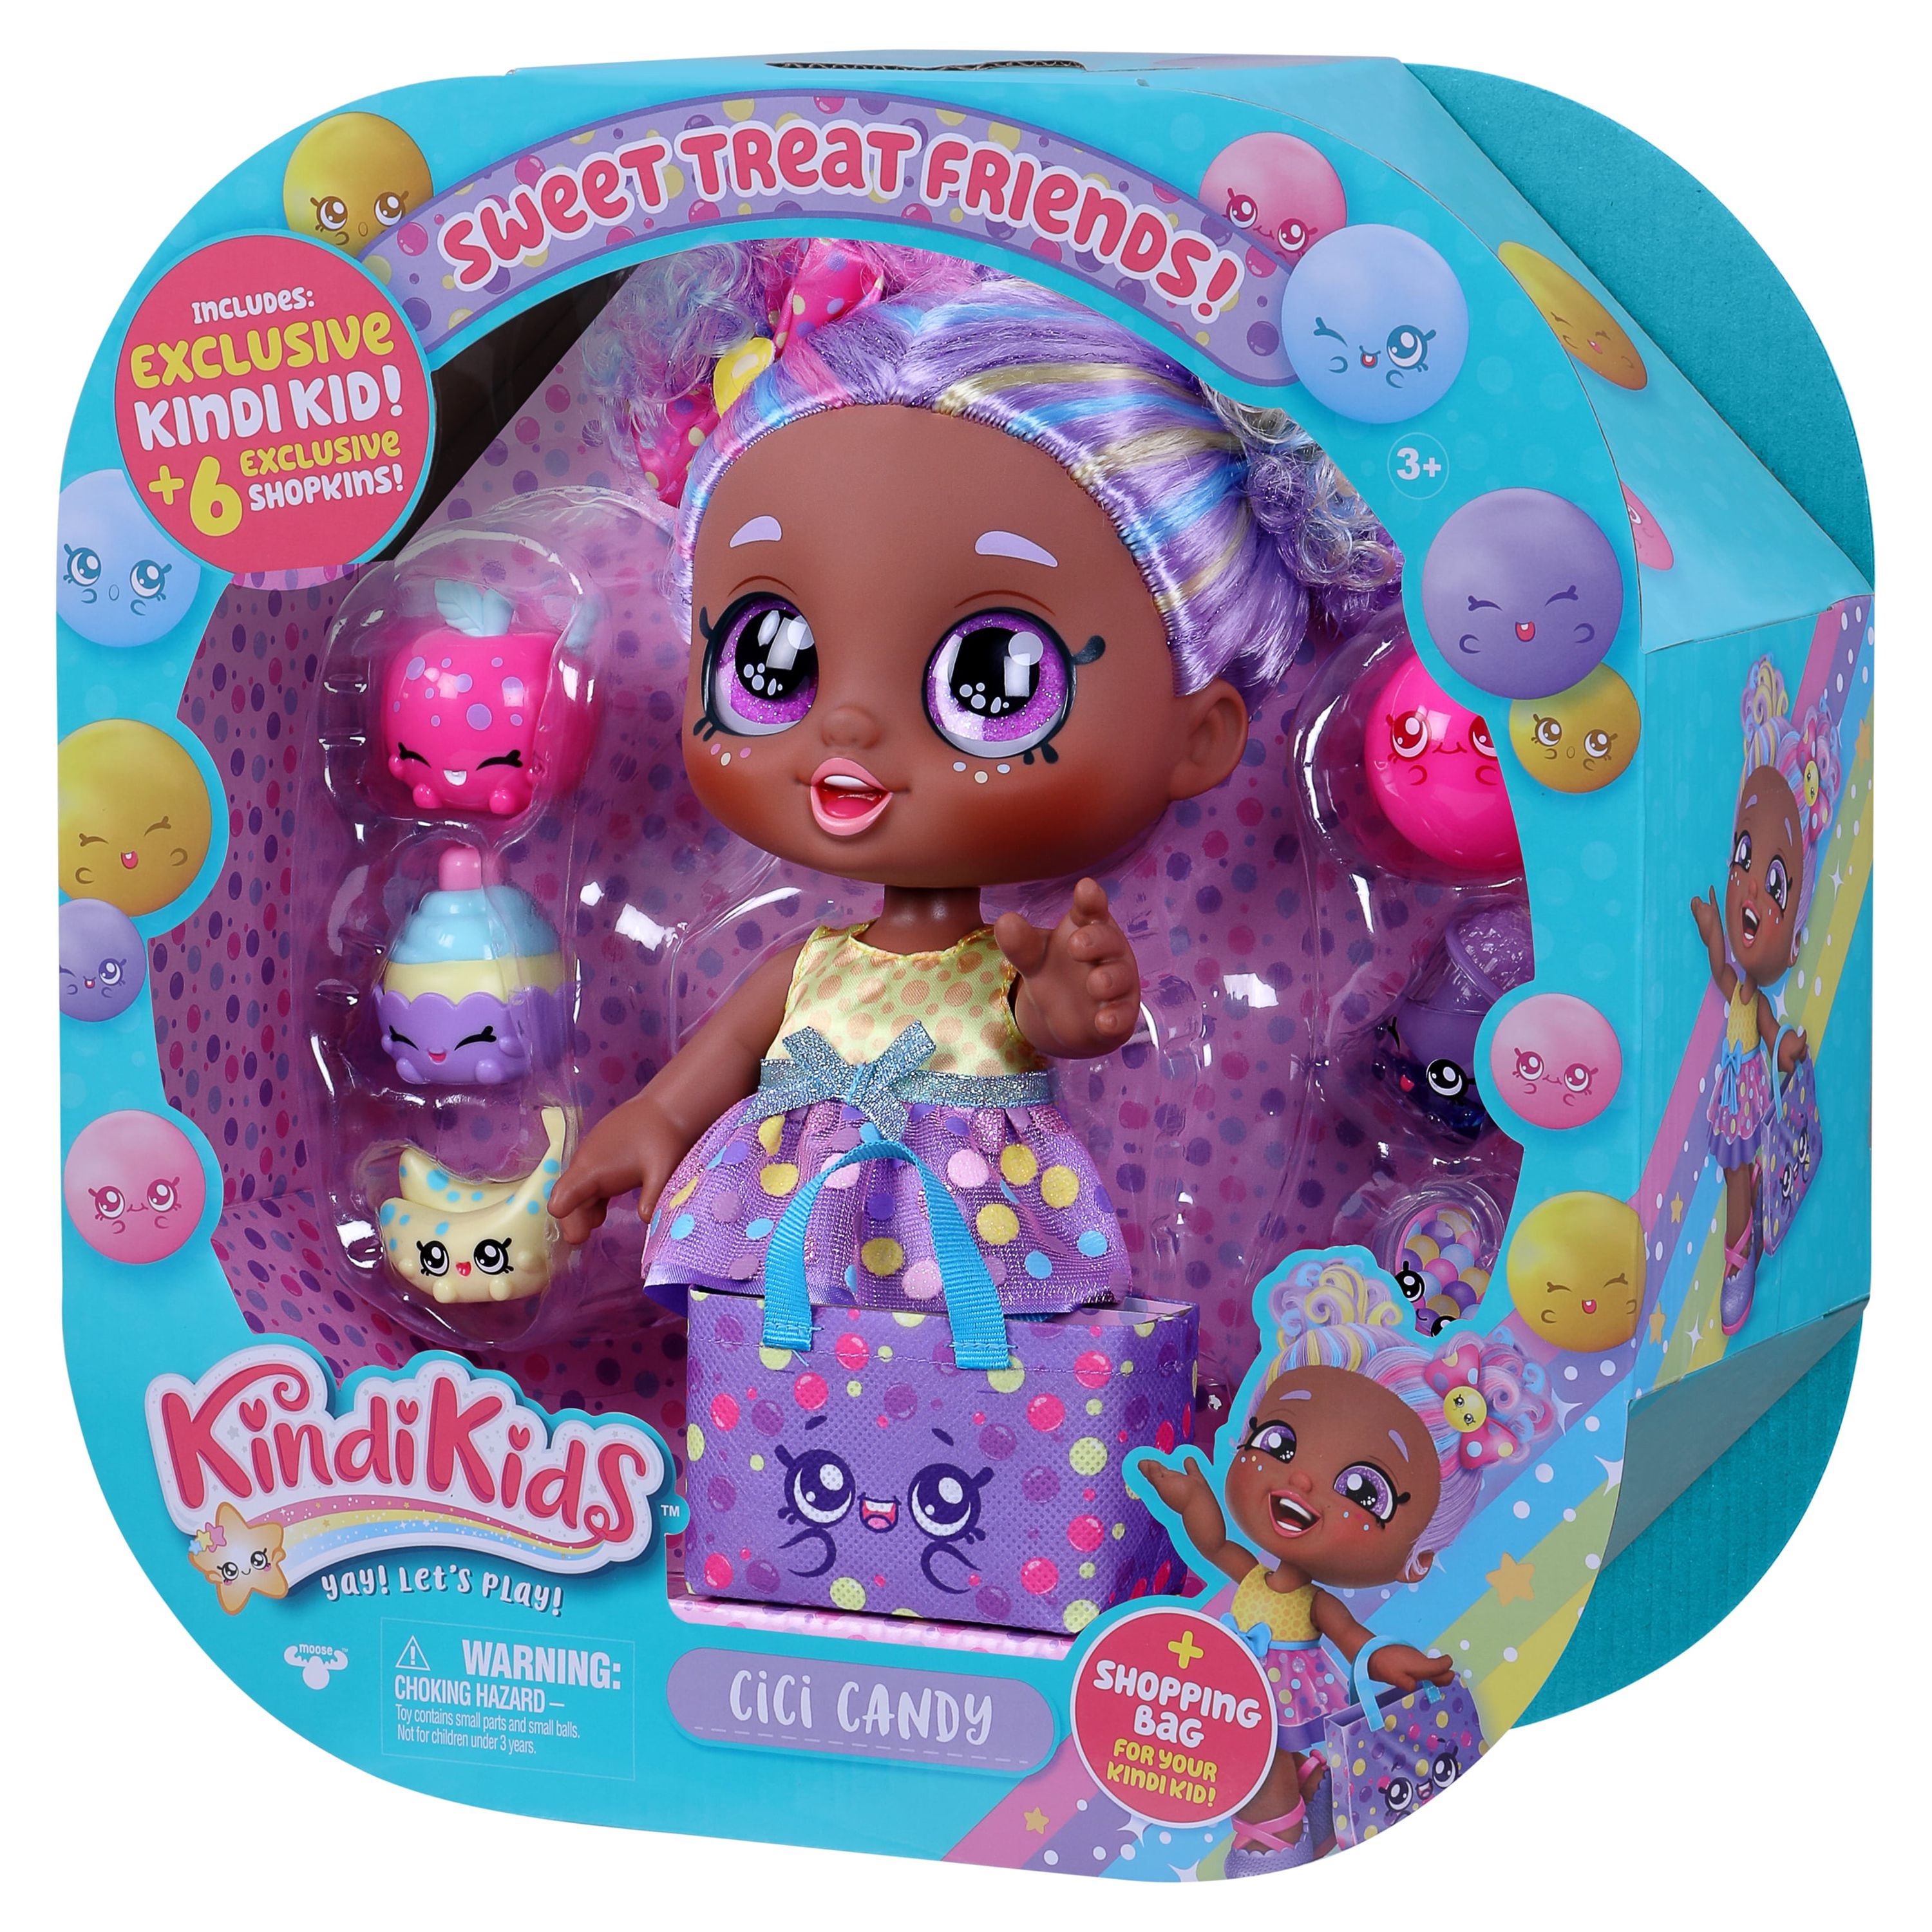 Kindi Kids Skittles 1 Shopping bag plus Shopkins Doll Playset, 8 Pieces - image 5 of 5